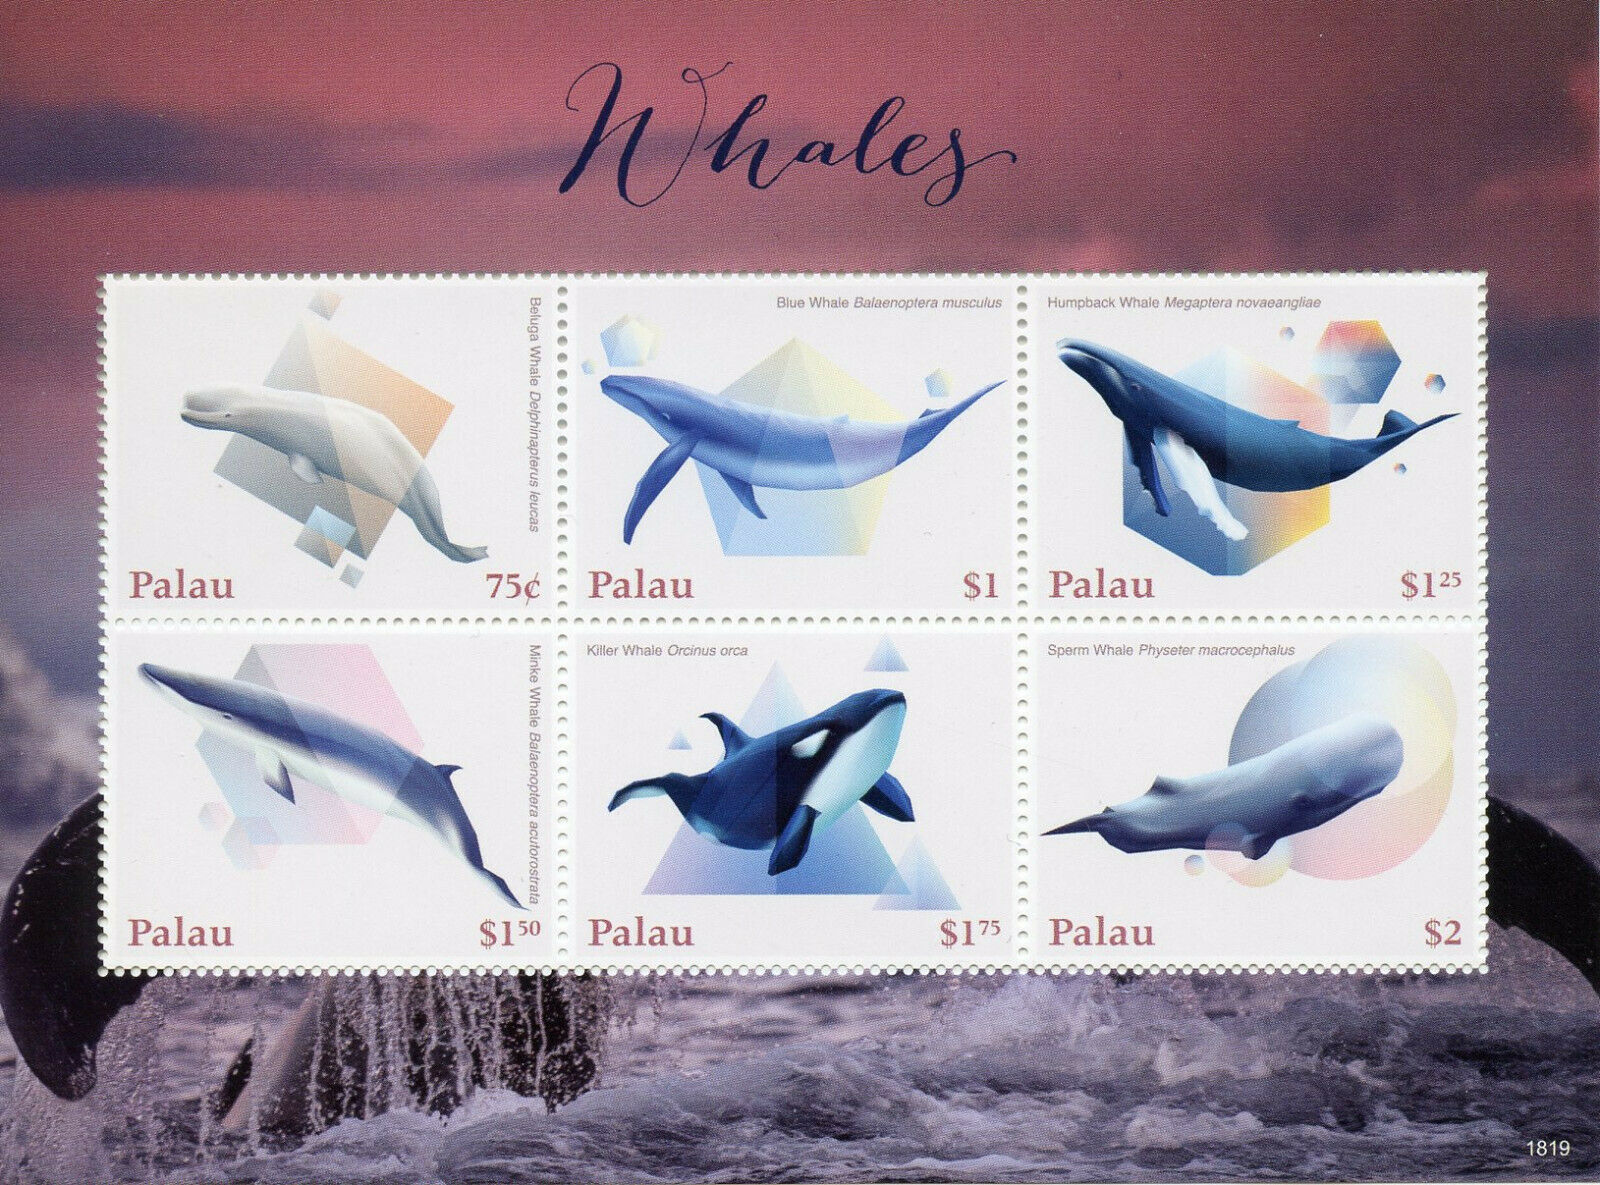 Palau 2018 MNH Marine Animals Stamps Whales Killer Humpback Blue Whale 6v M/S